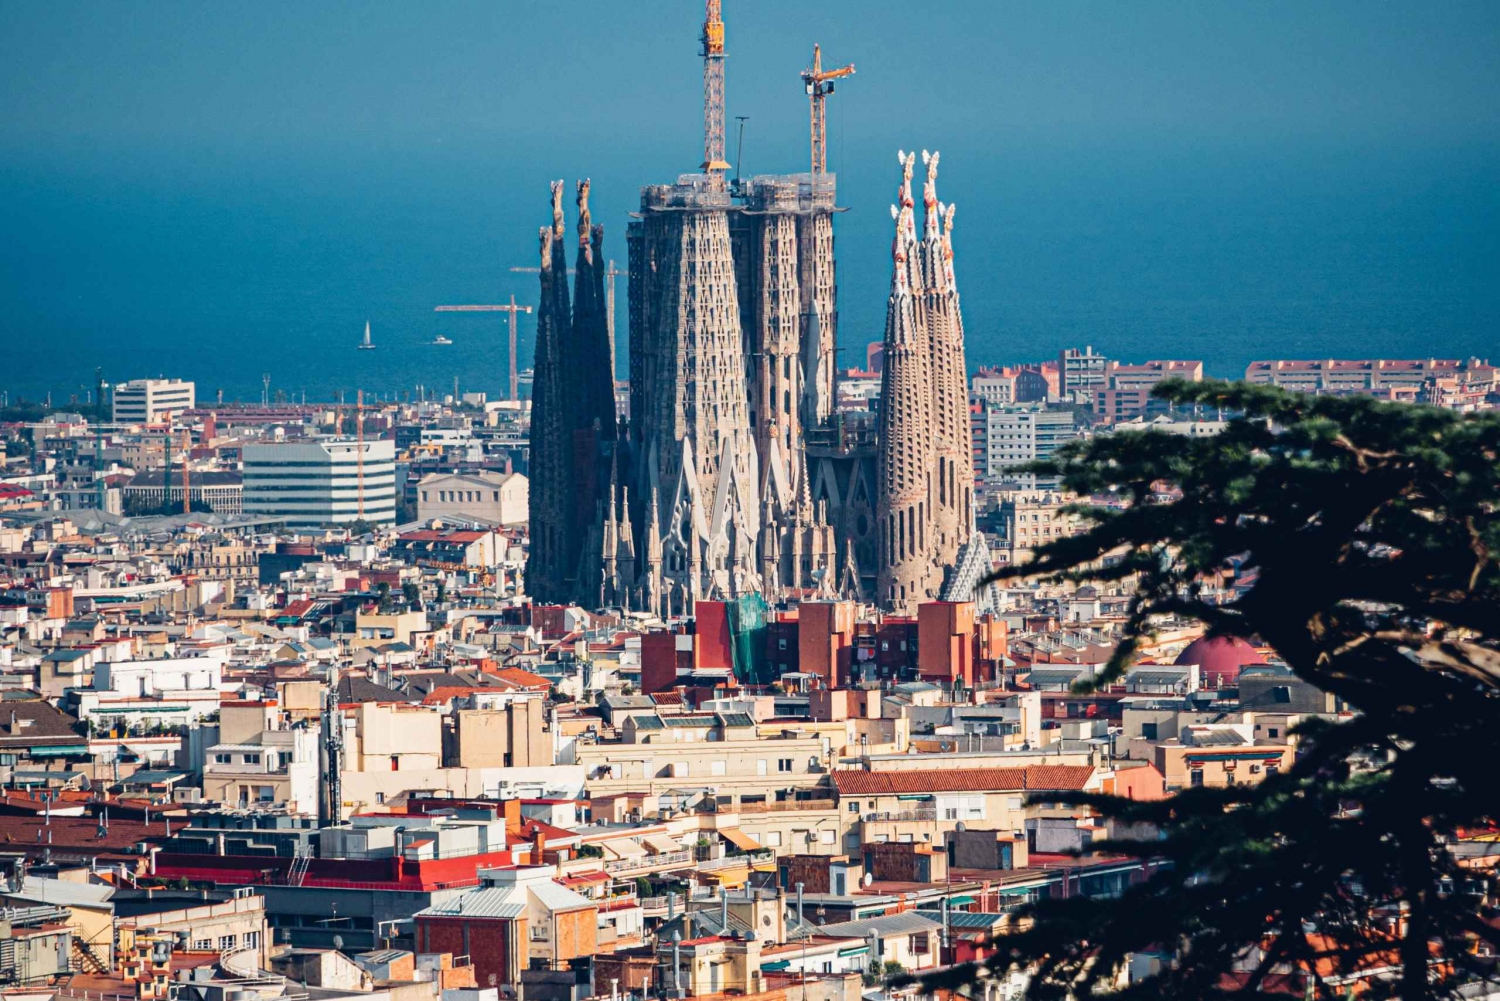 Barcelona: Sagrada Familia Ticket with In-App Audio Guide